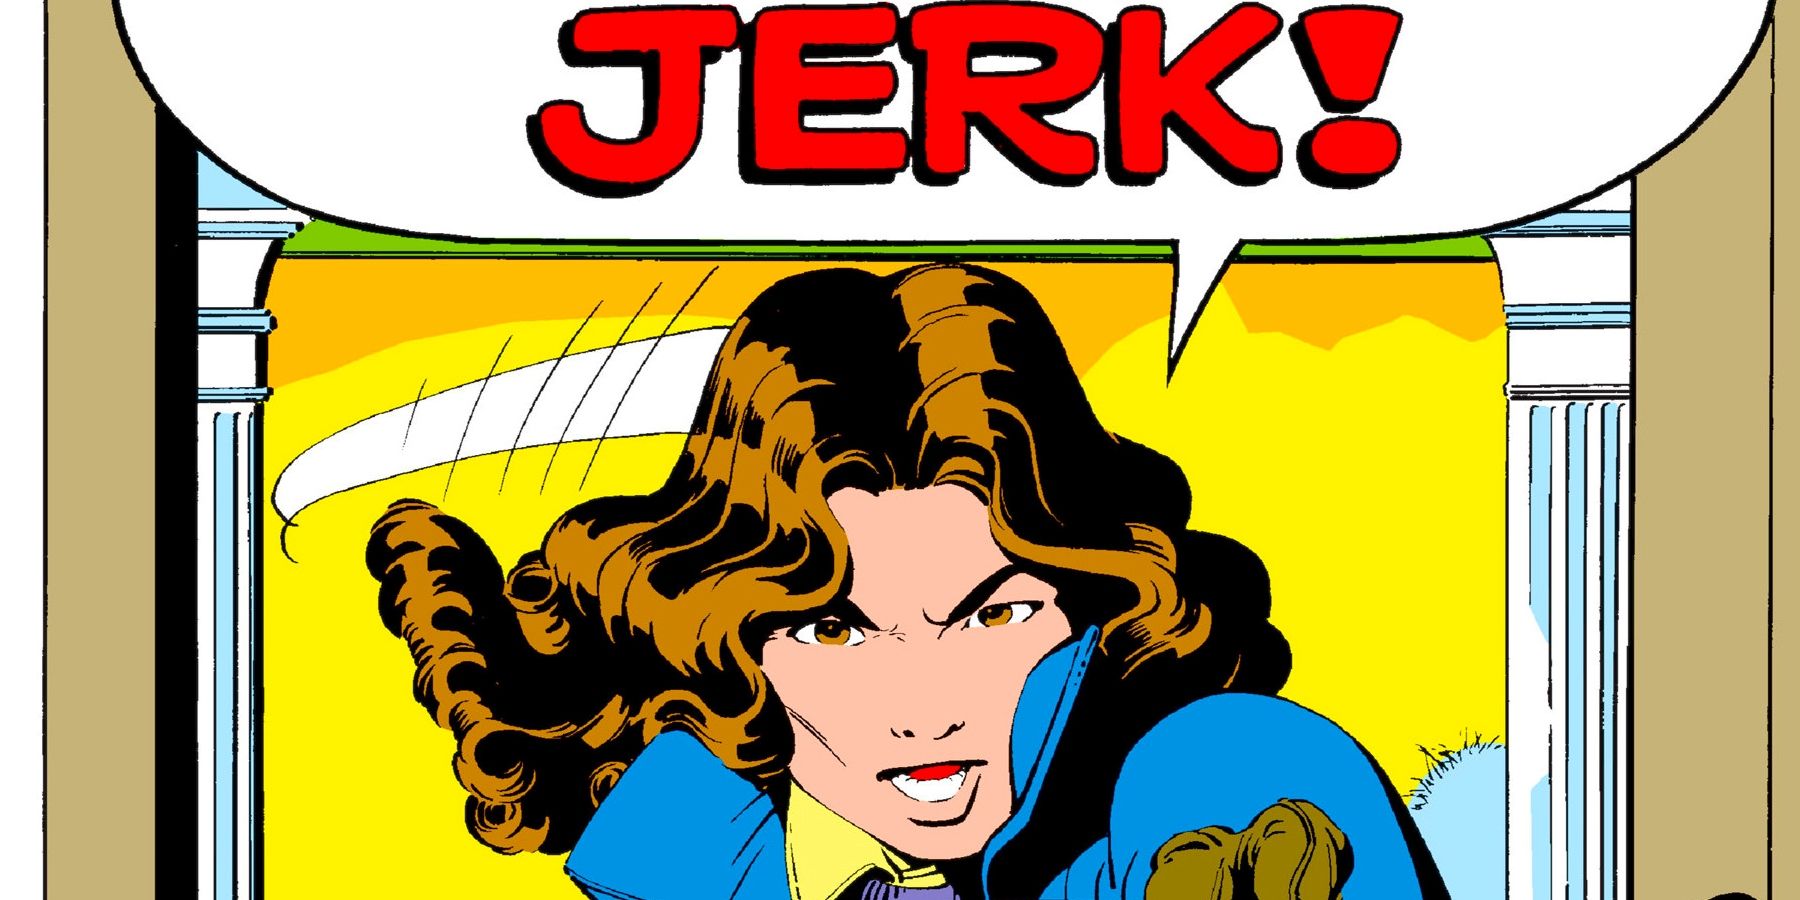 Kitty Pryde calls Professor Xavier a Jerk! in Marvel Comics